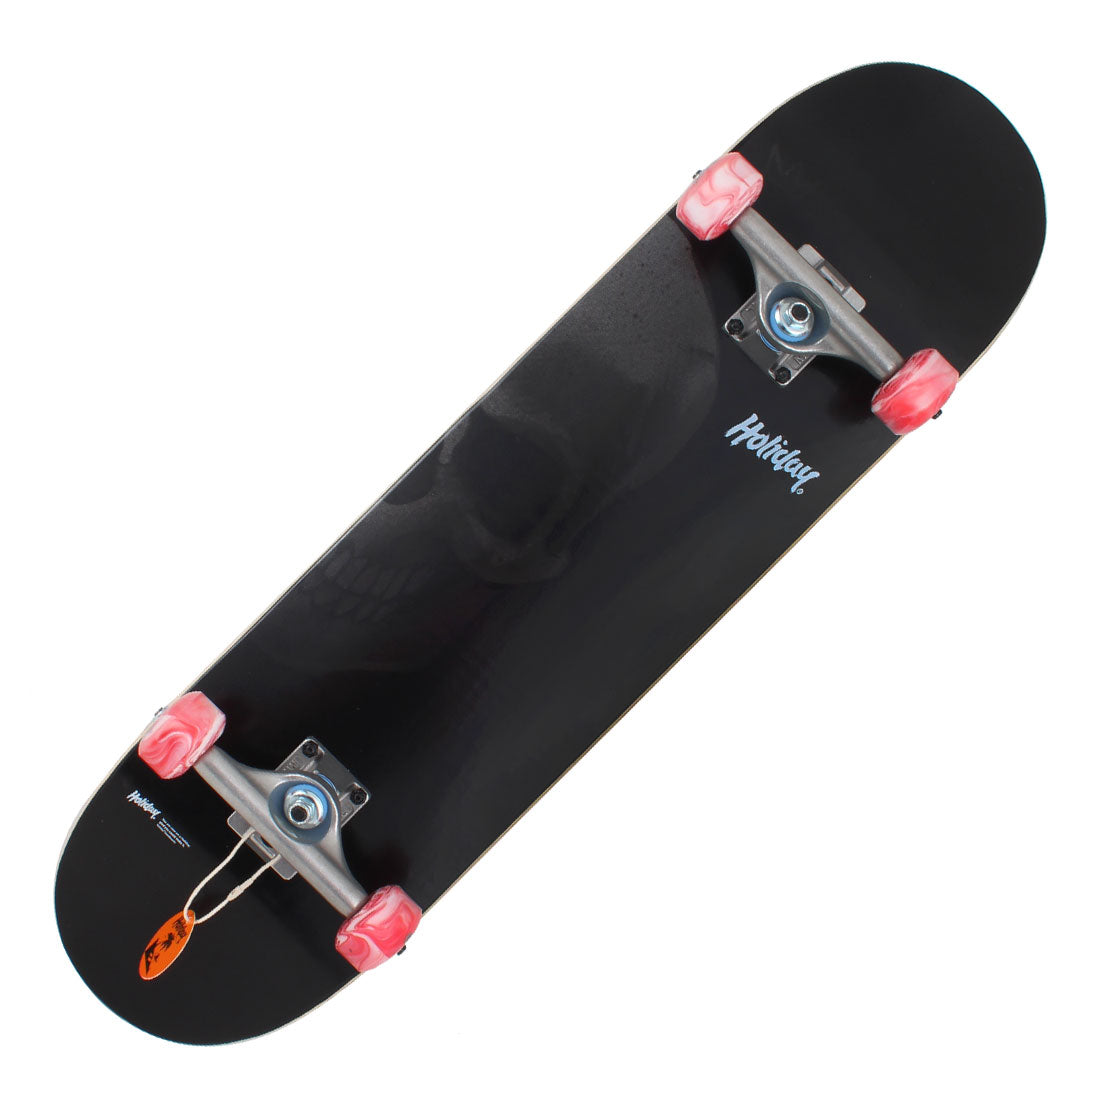 Holiday Skully 8.0 Complete - Black Skateboard Completes Modern Street